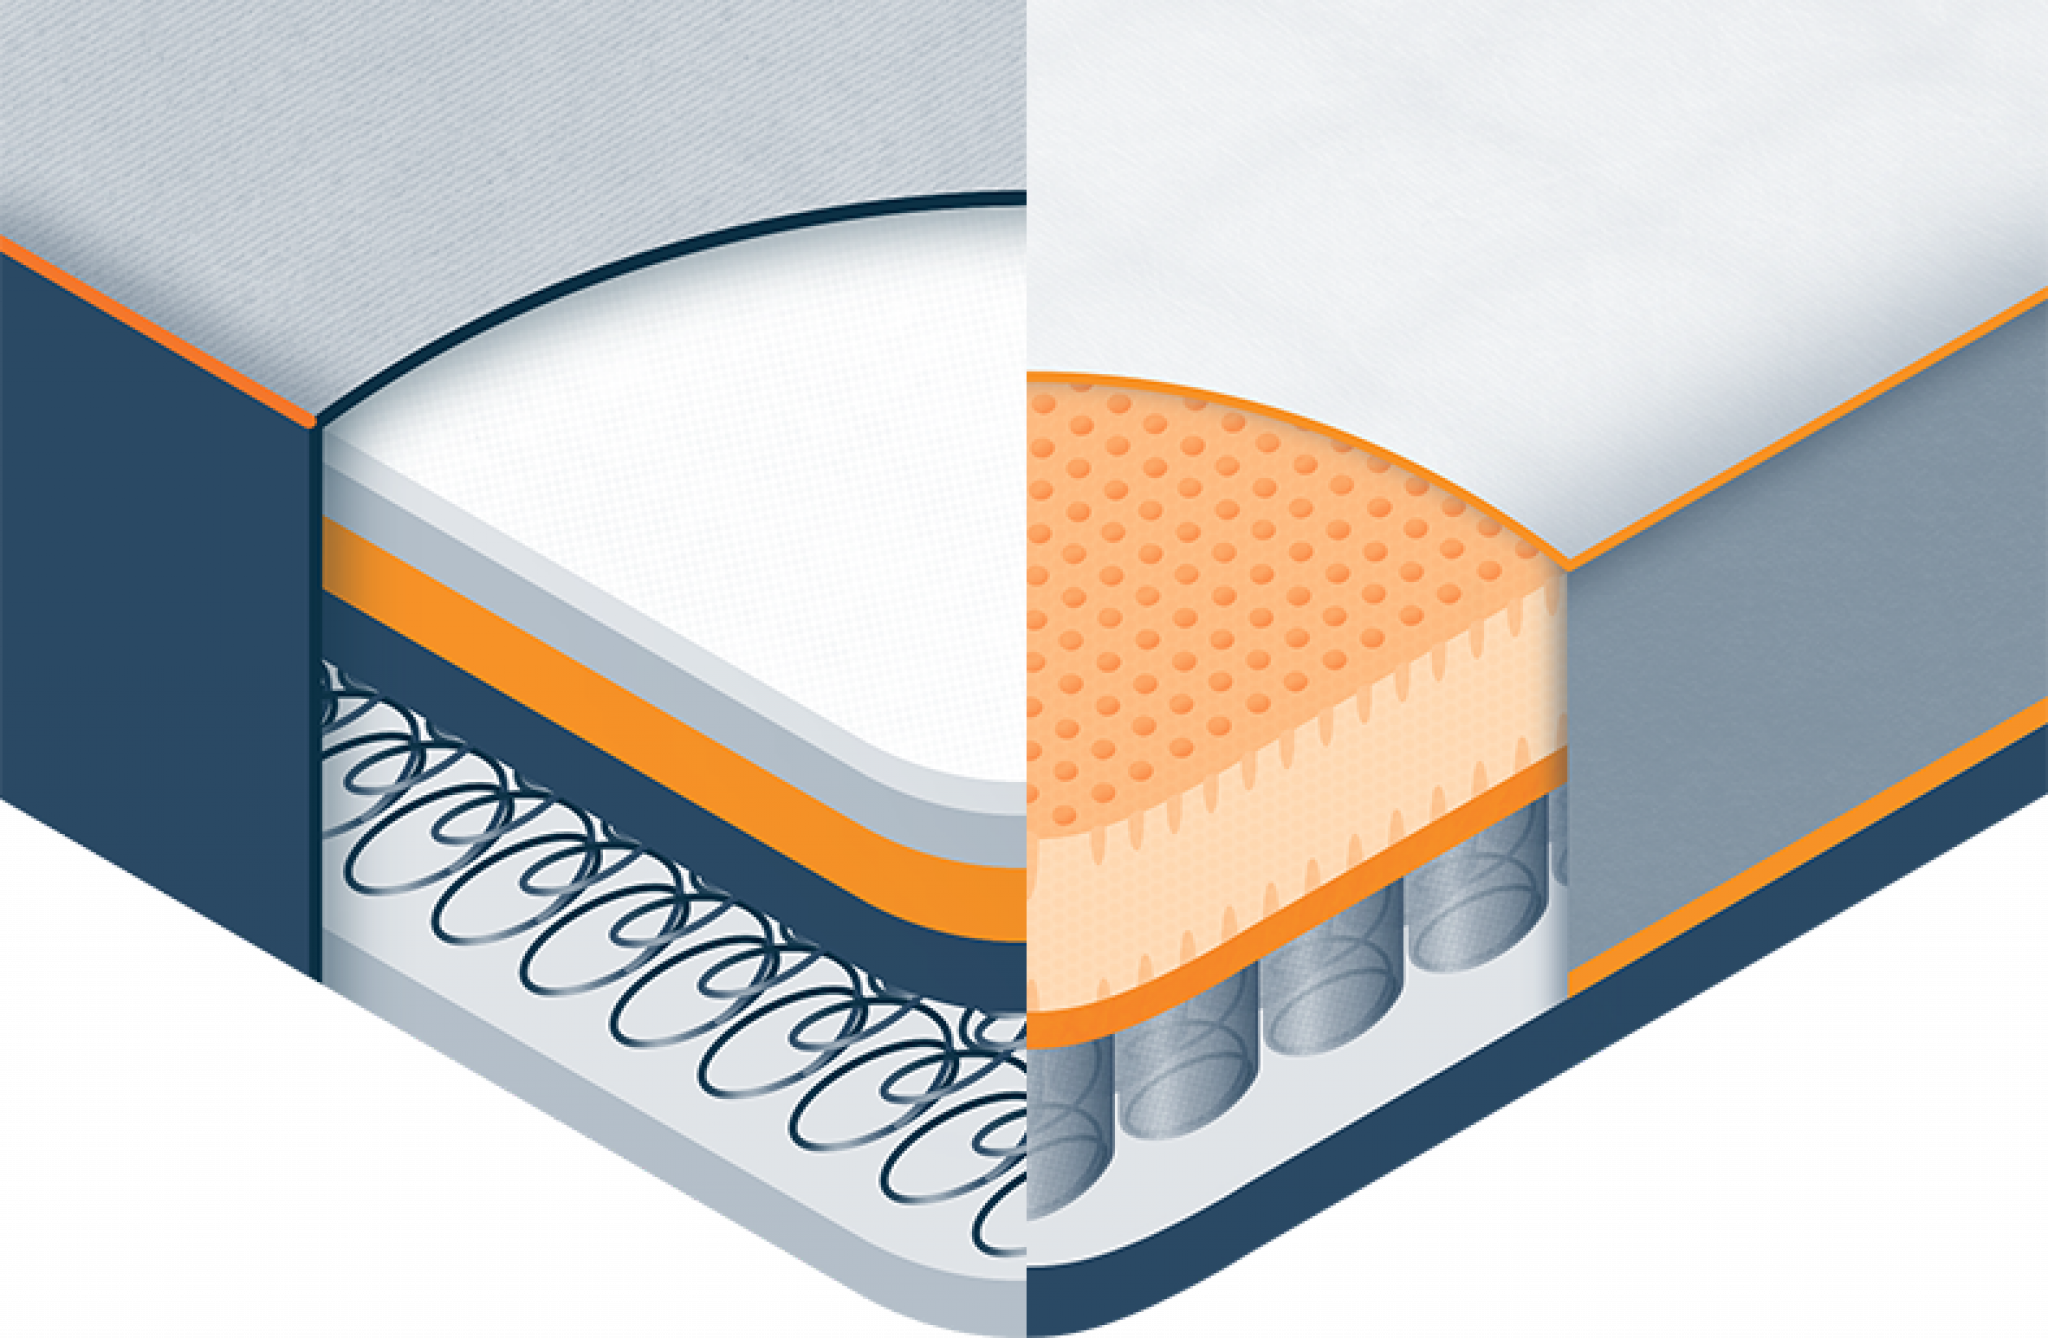 dormington hybrid innerspring mattress reviews